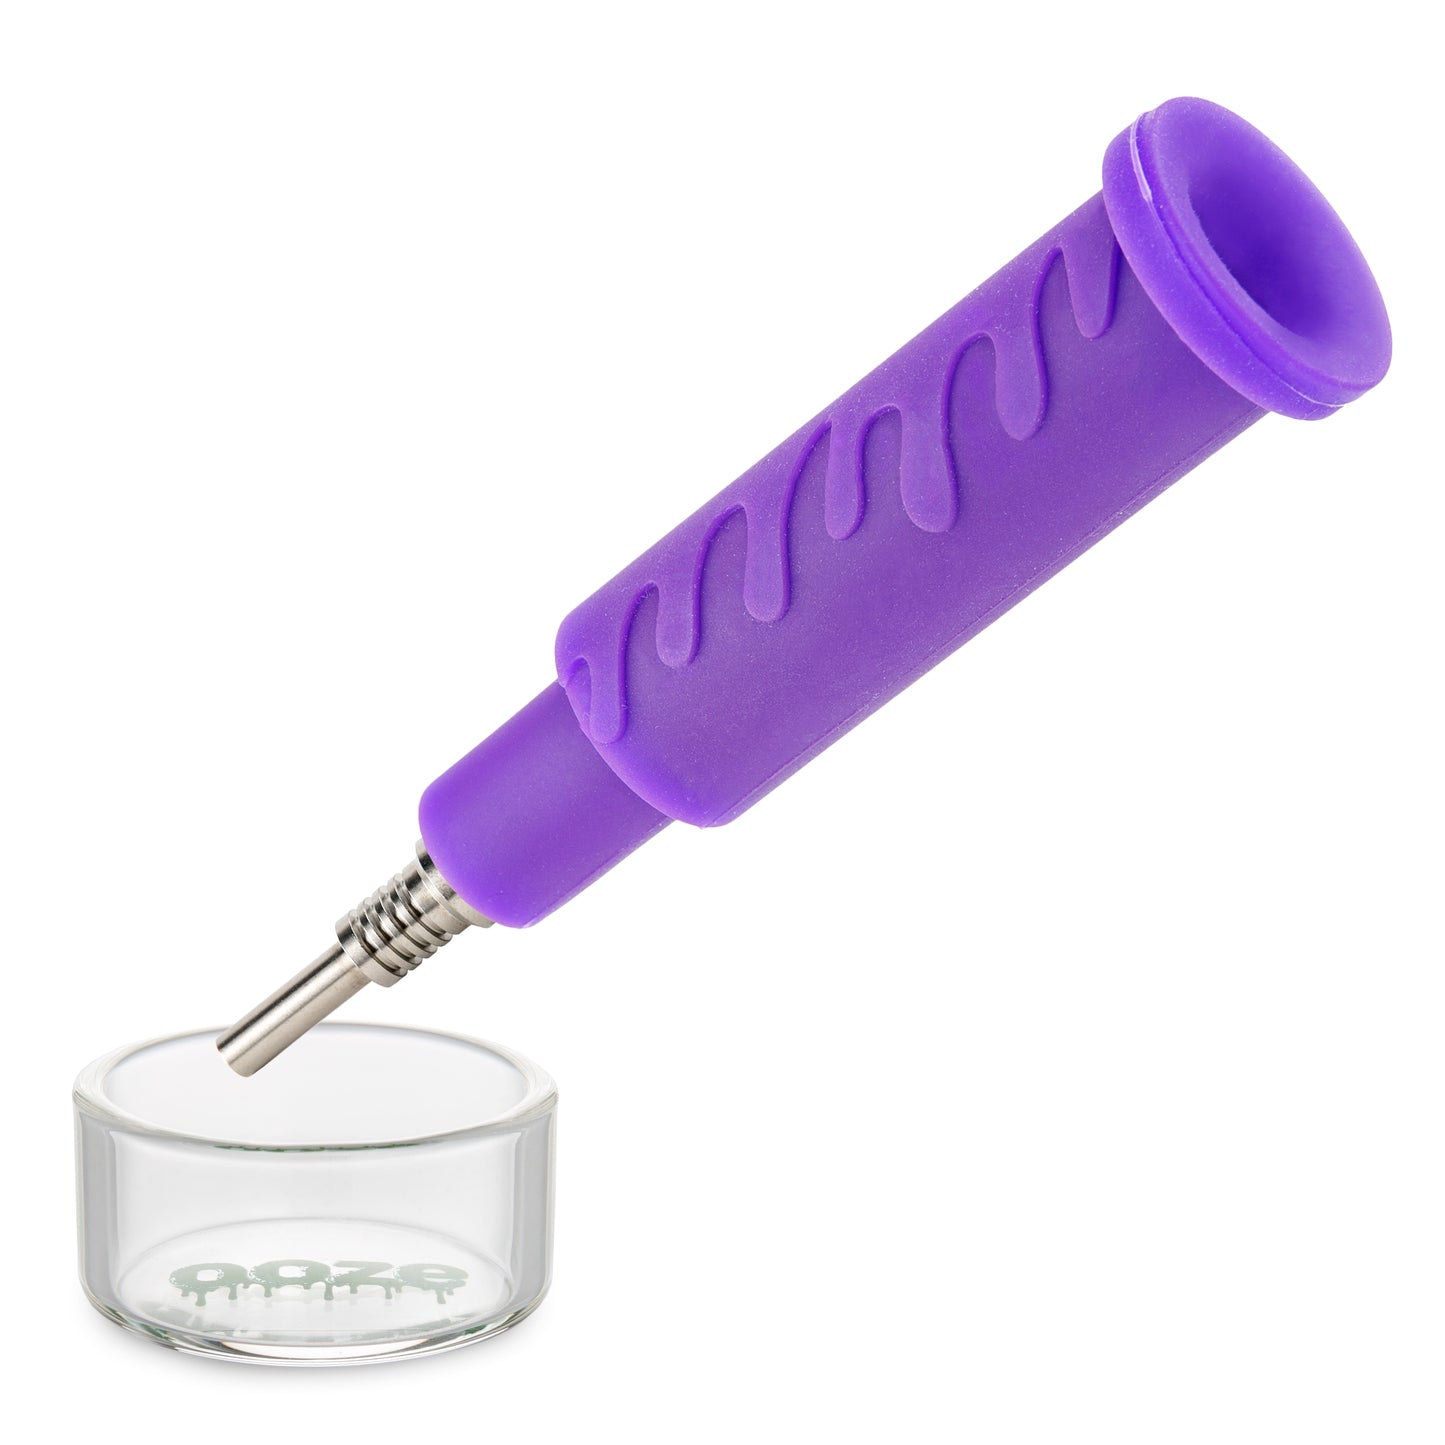 Ooze Cranium Silicone Water Pipe, Dab Rig & Dab Straw - Ultra Purple